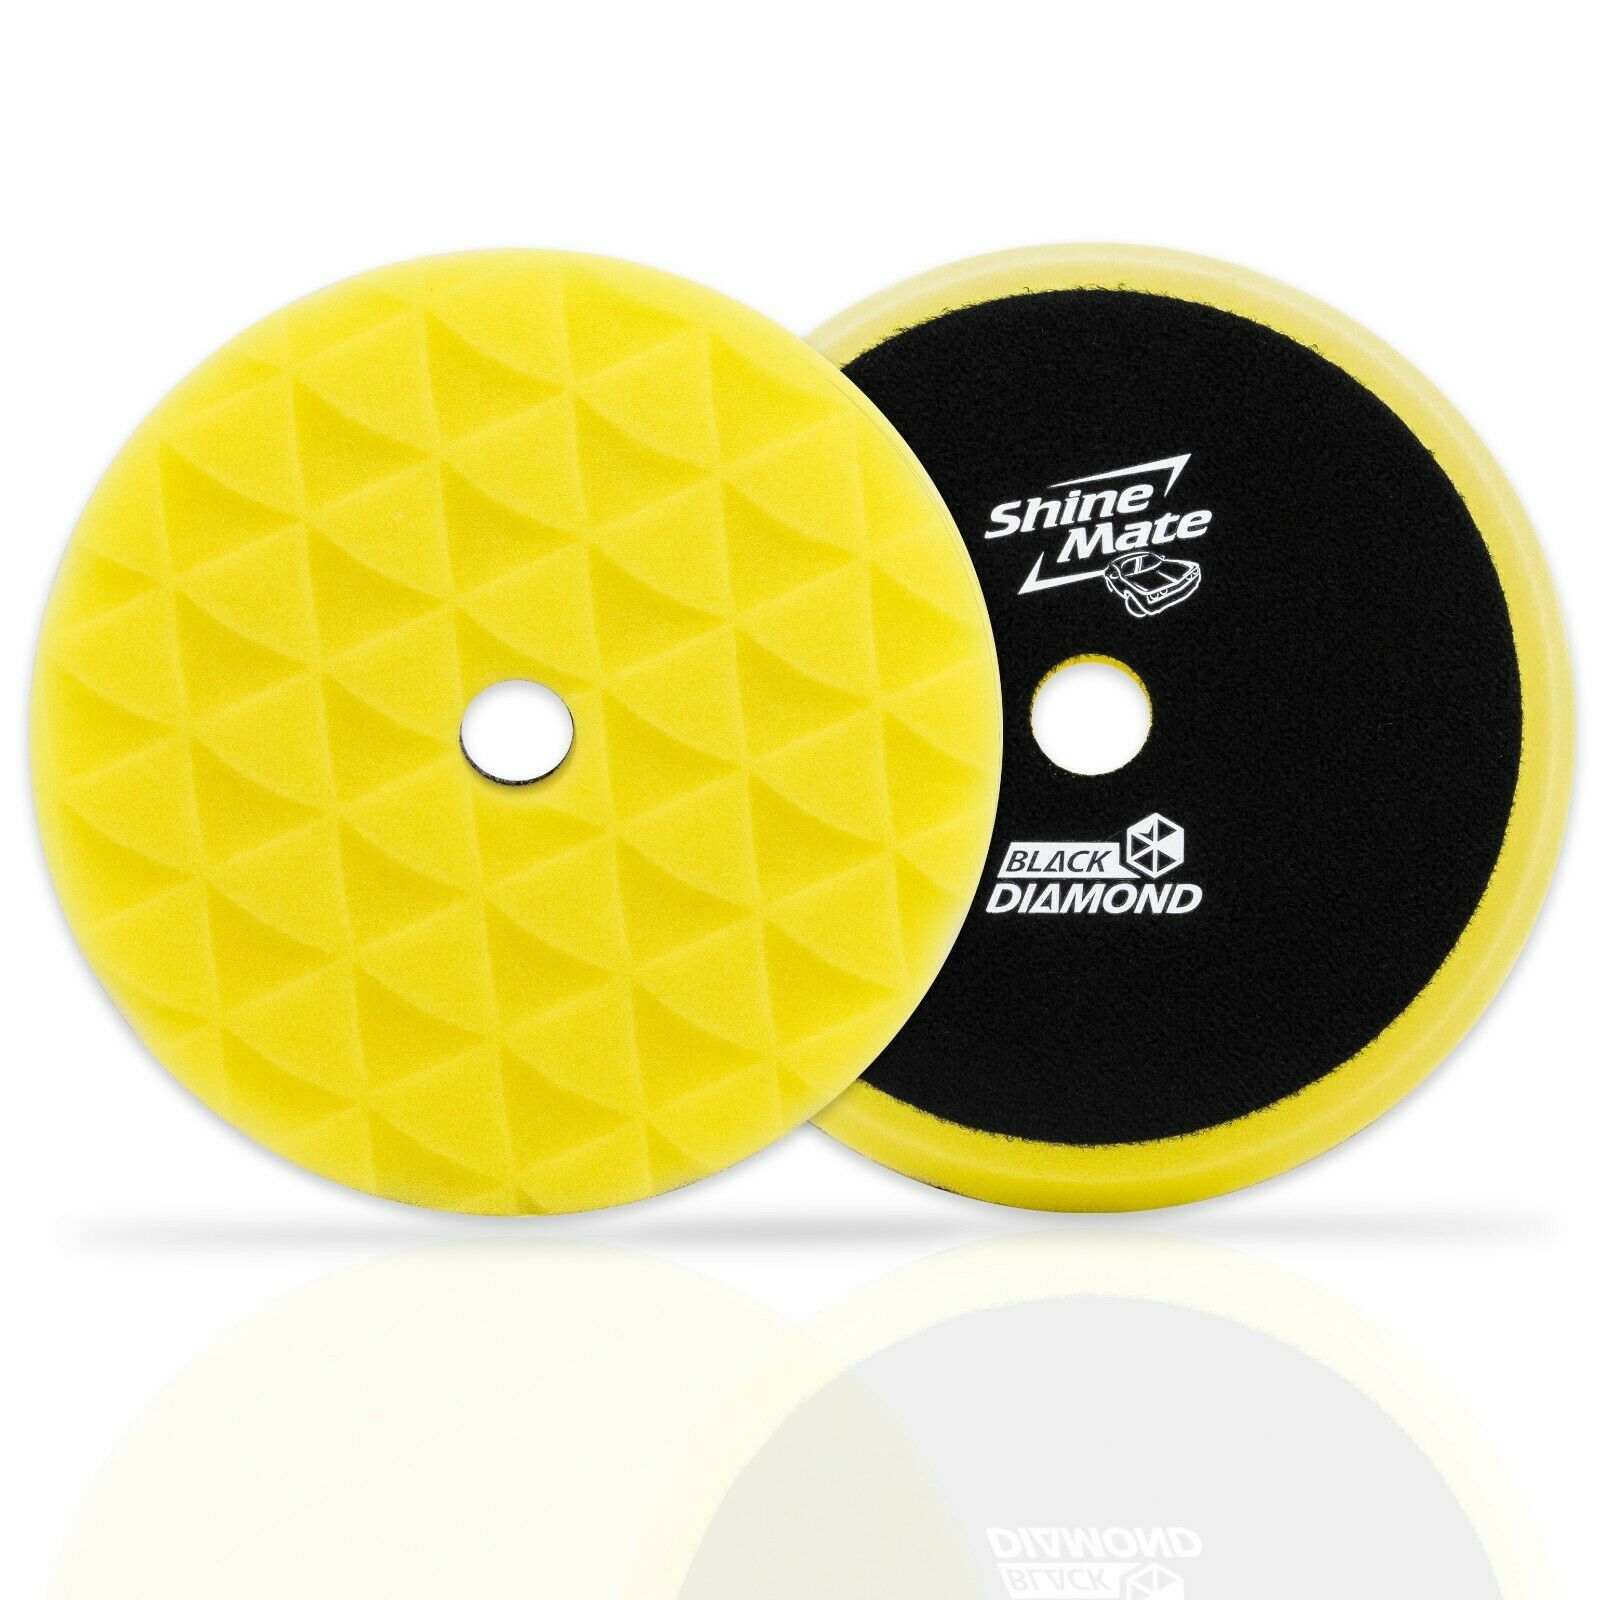 Shinemate - 7" Black Diamond (1) Yellow High Cut Foam Pad + (1) Red Finishing Foam Pad to fit 6" Backing Plates